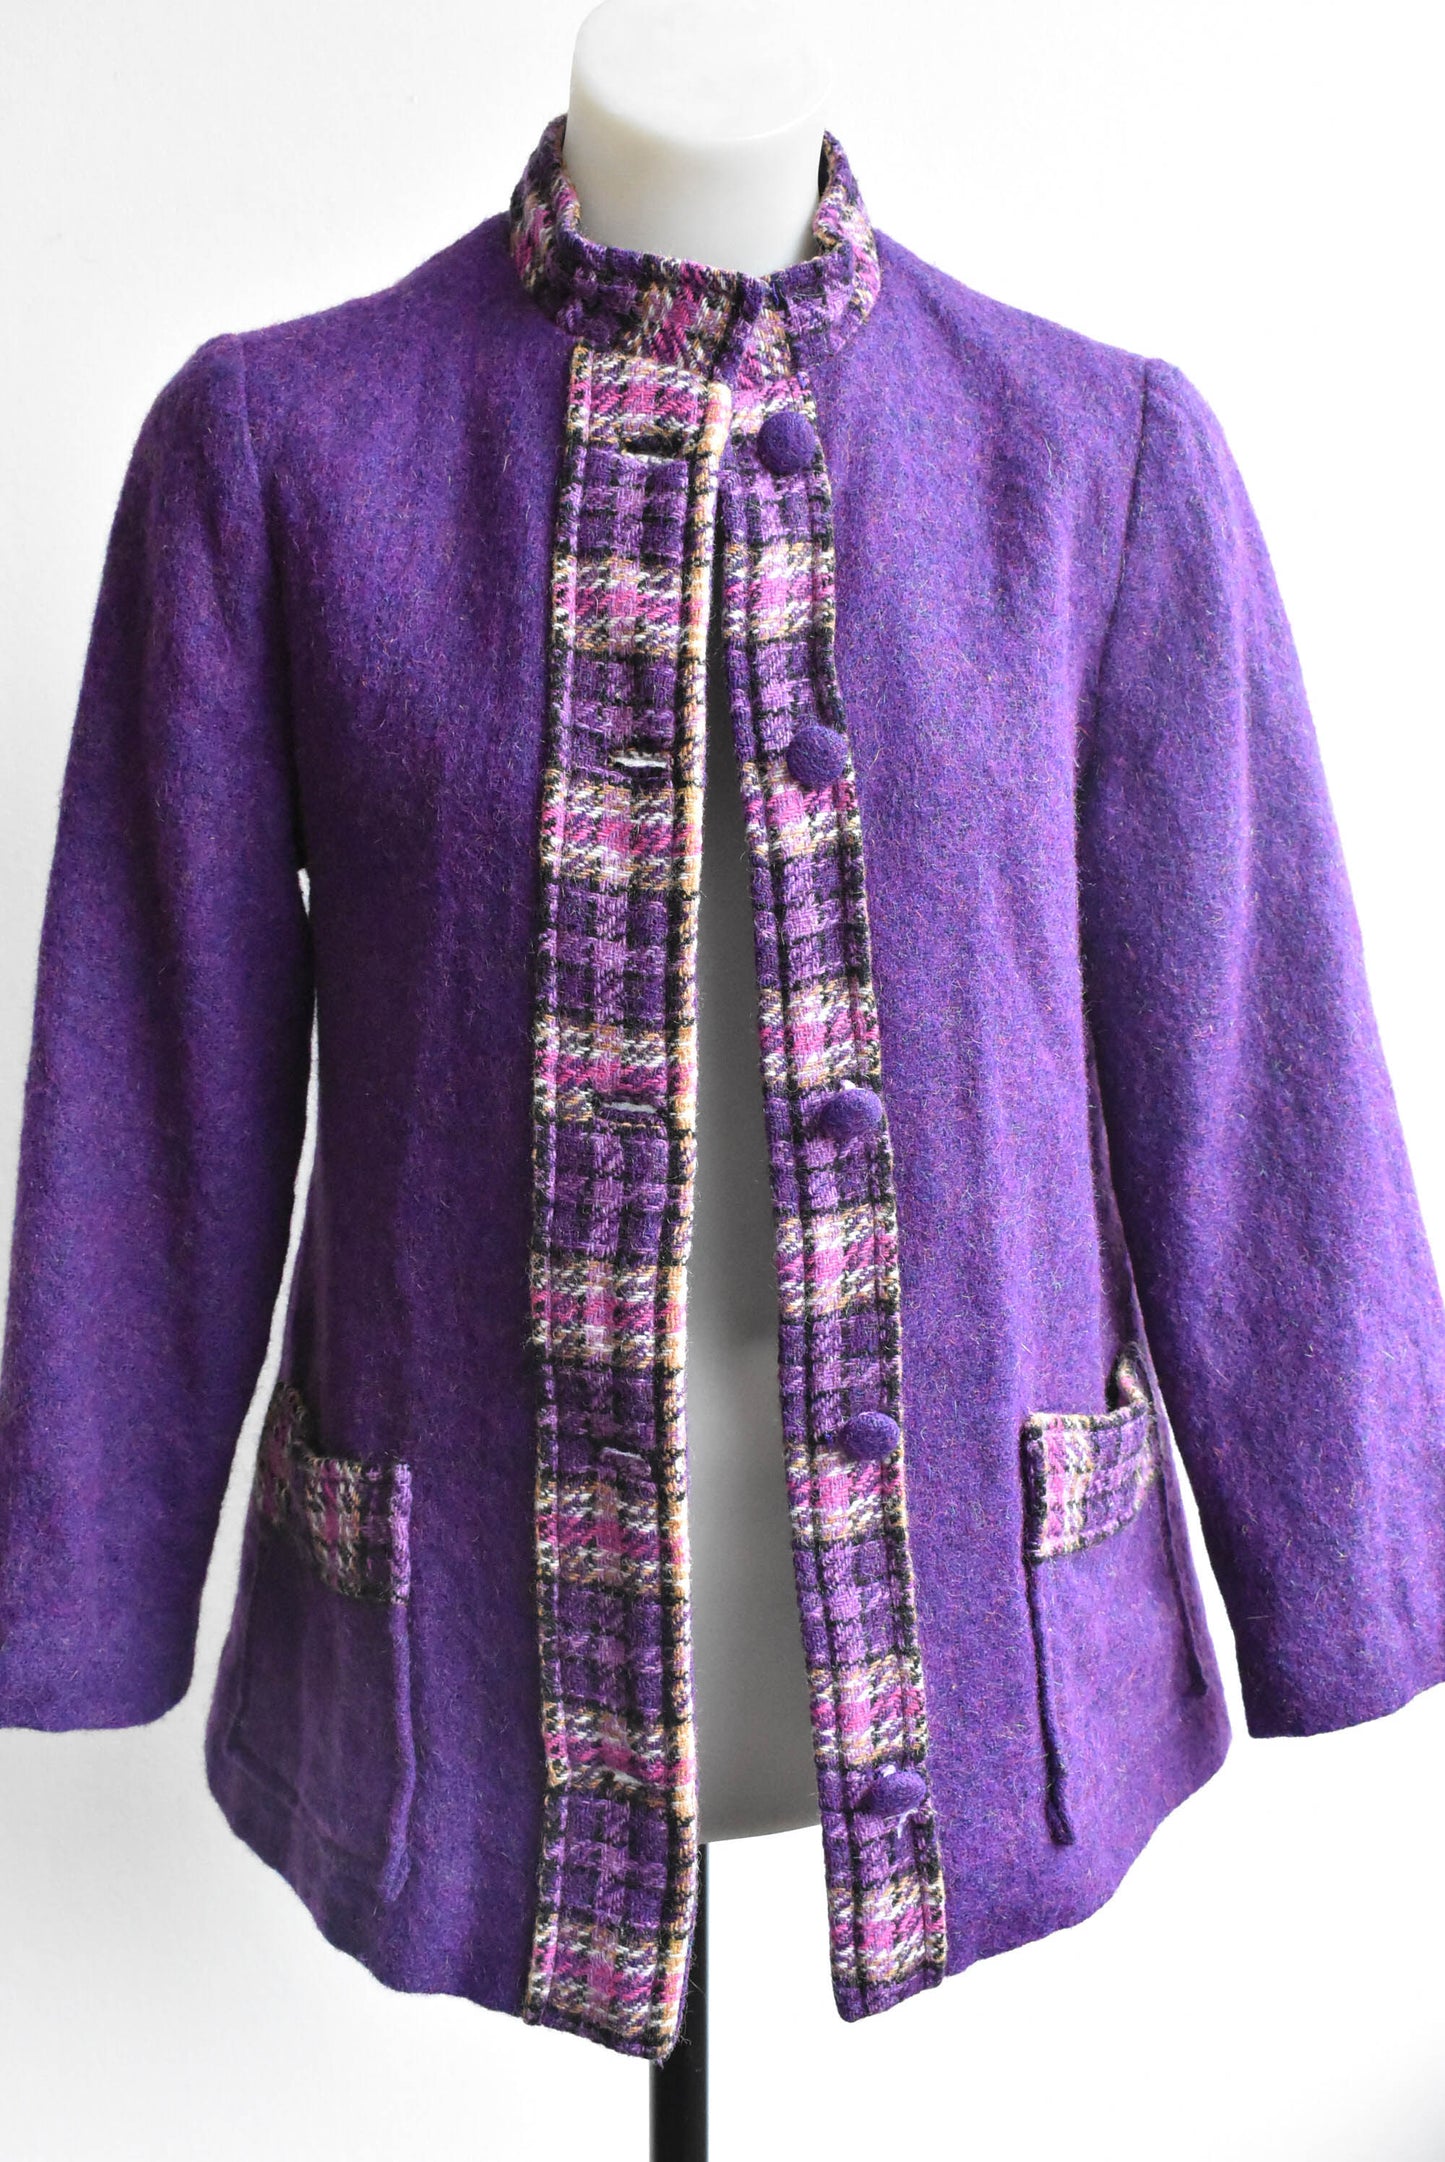 Handmade Woollen jacket, Size small